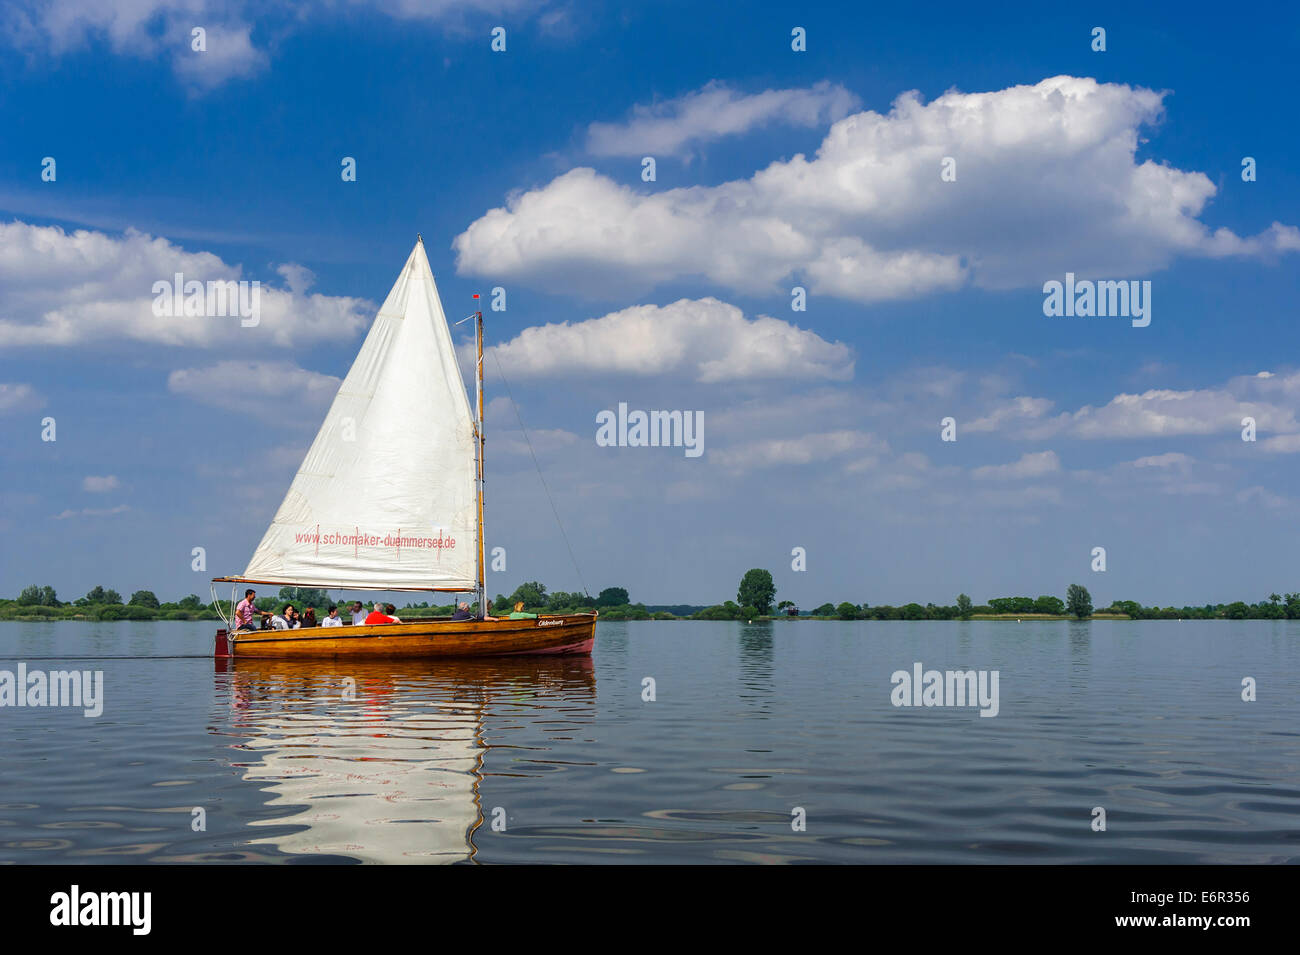 Navegar por el lago dümmer, dümmerlohhausen, distrito de diepholz, Niedersachsen, Alemania Foto de stock